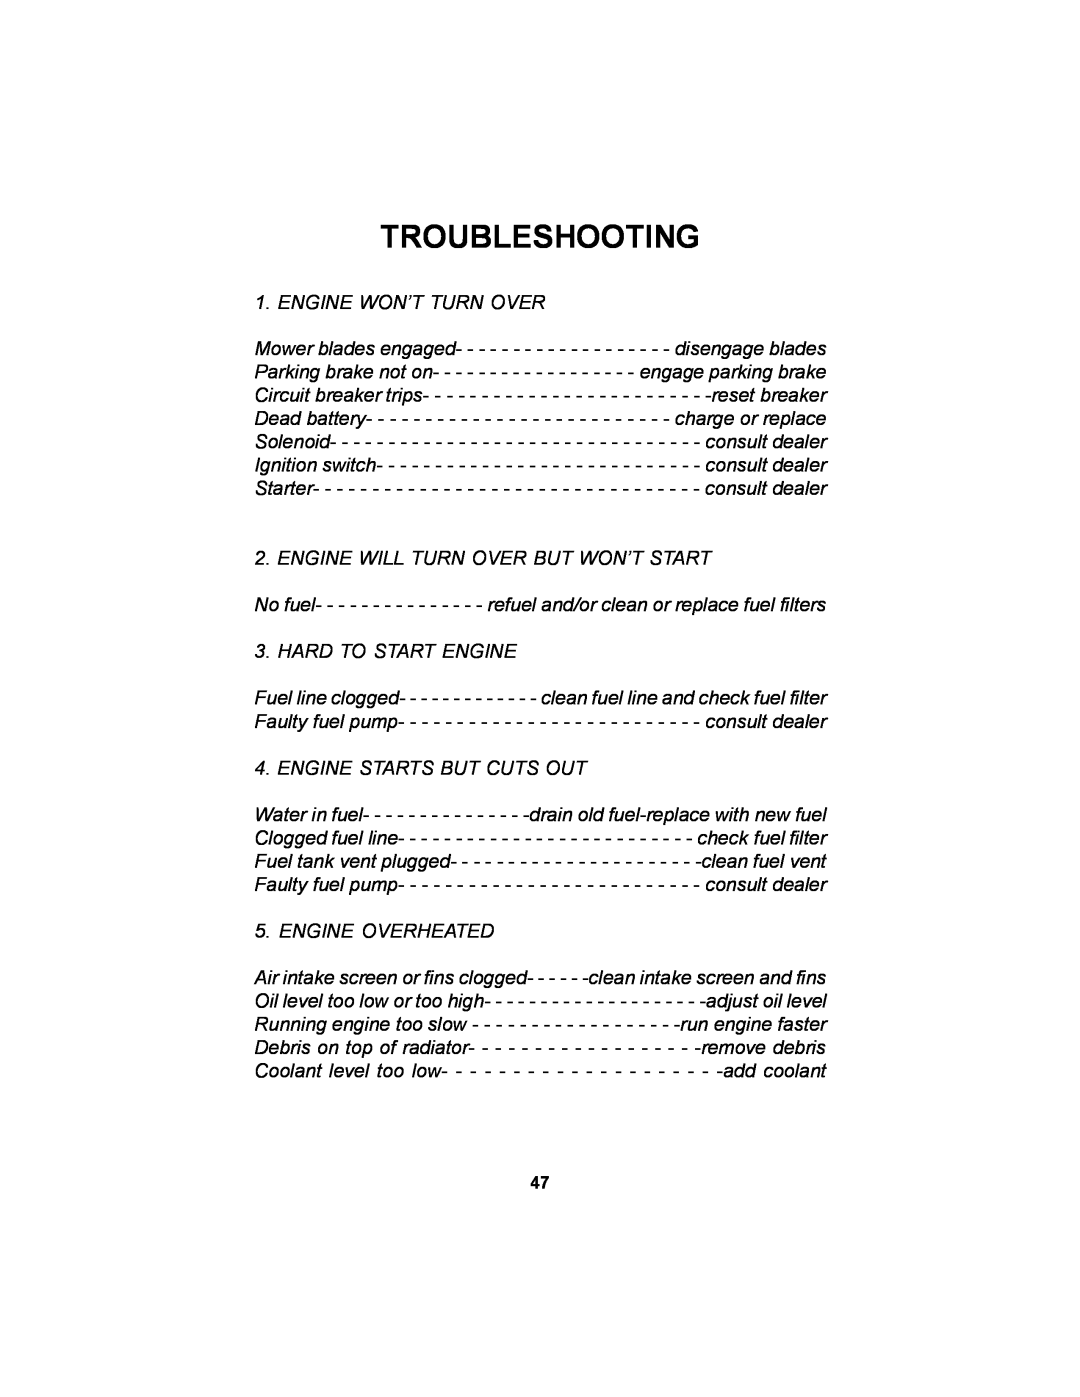 Dixon 18626-106 manual Troubleshooting 